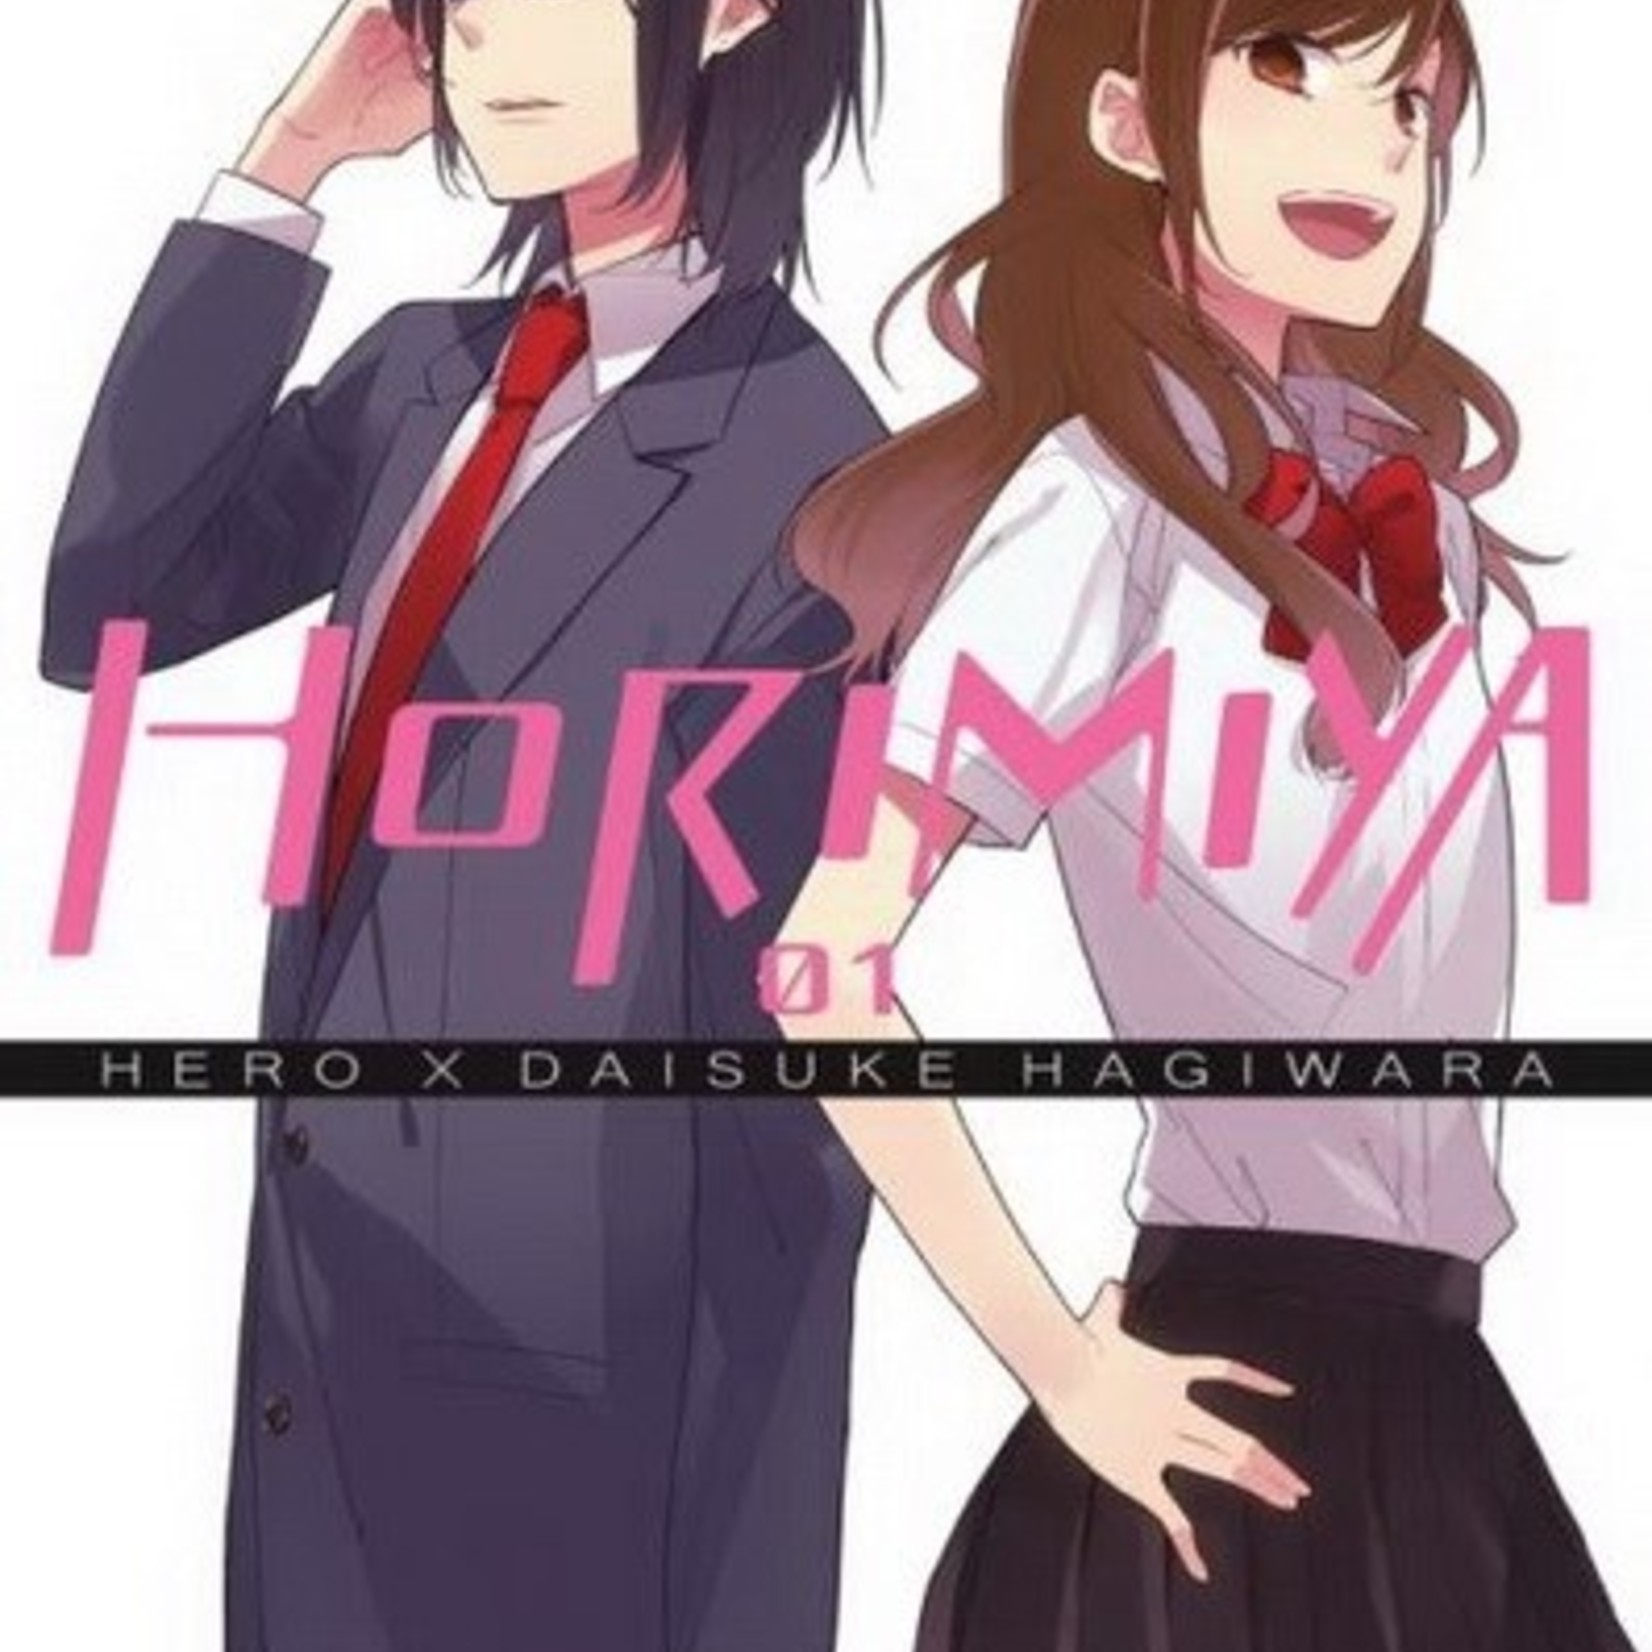 Nobi-Nobi Manga - Horimiya Tome 01